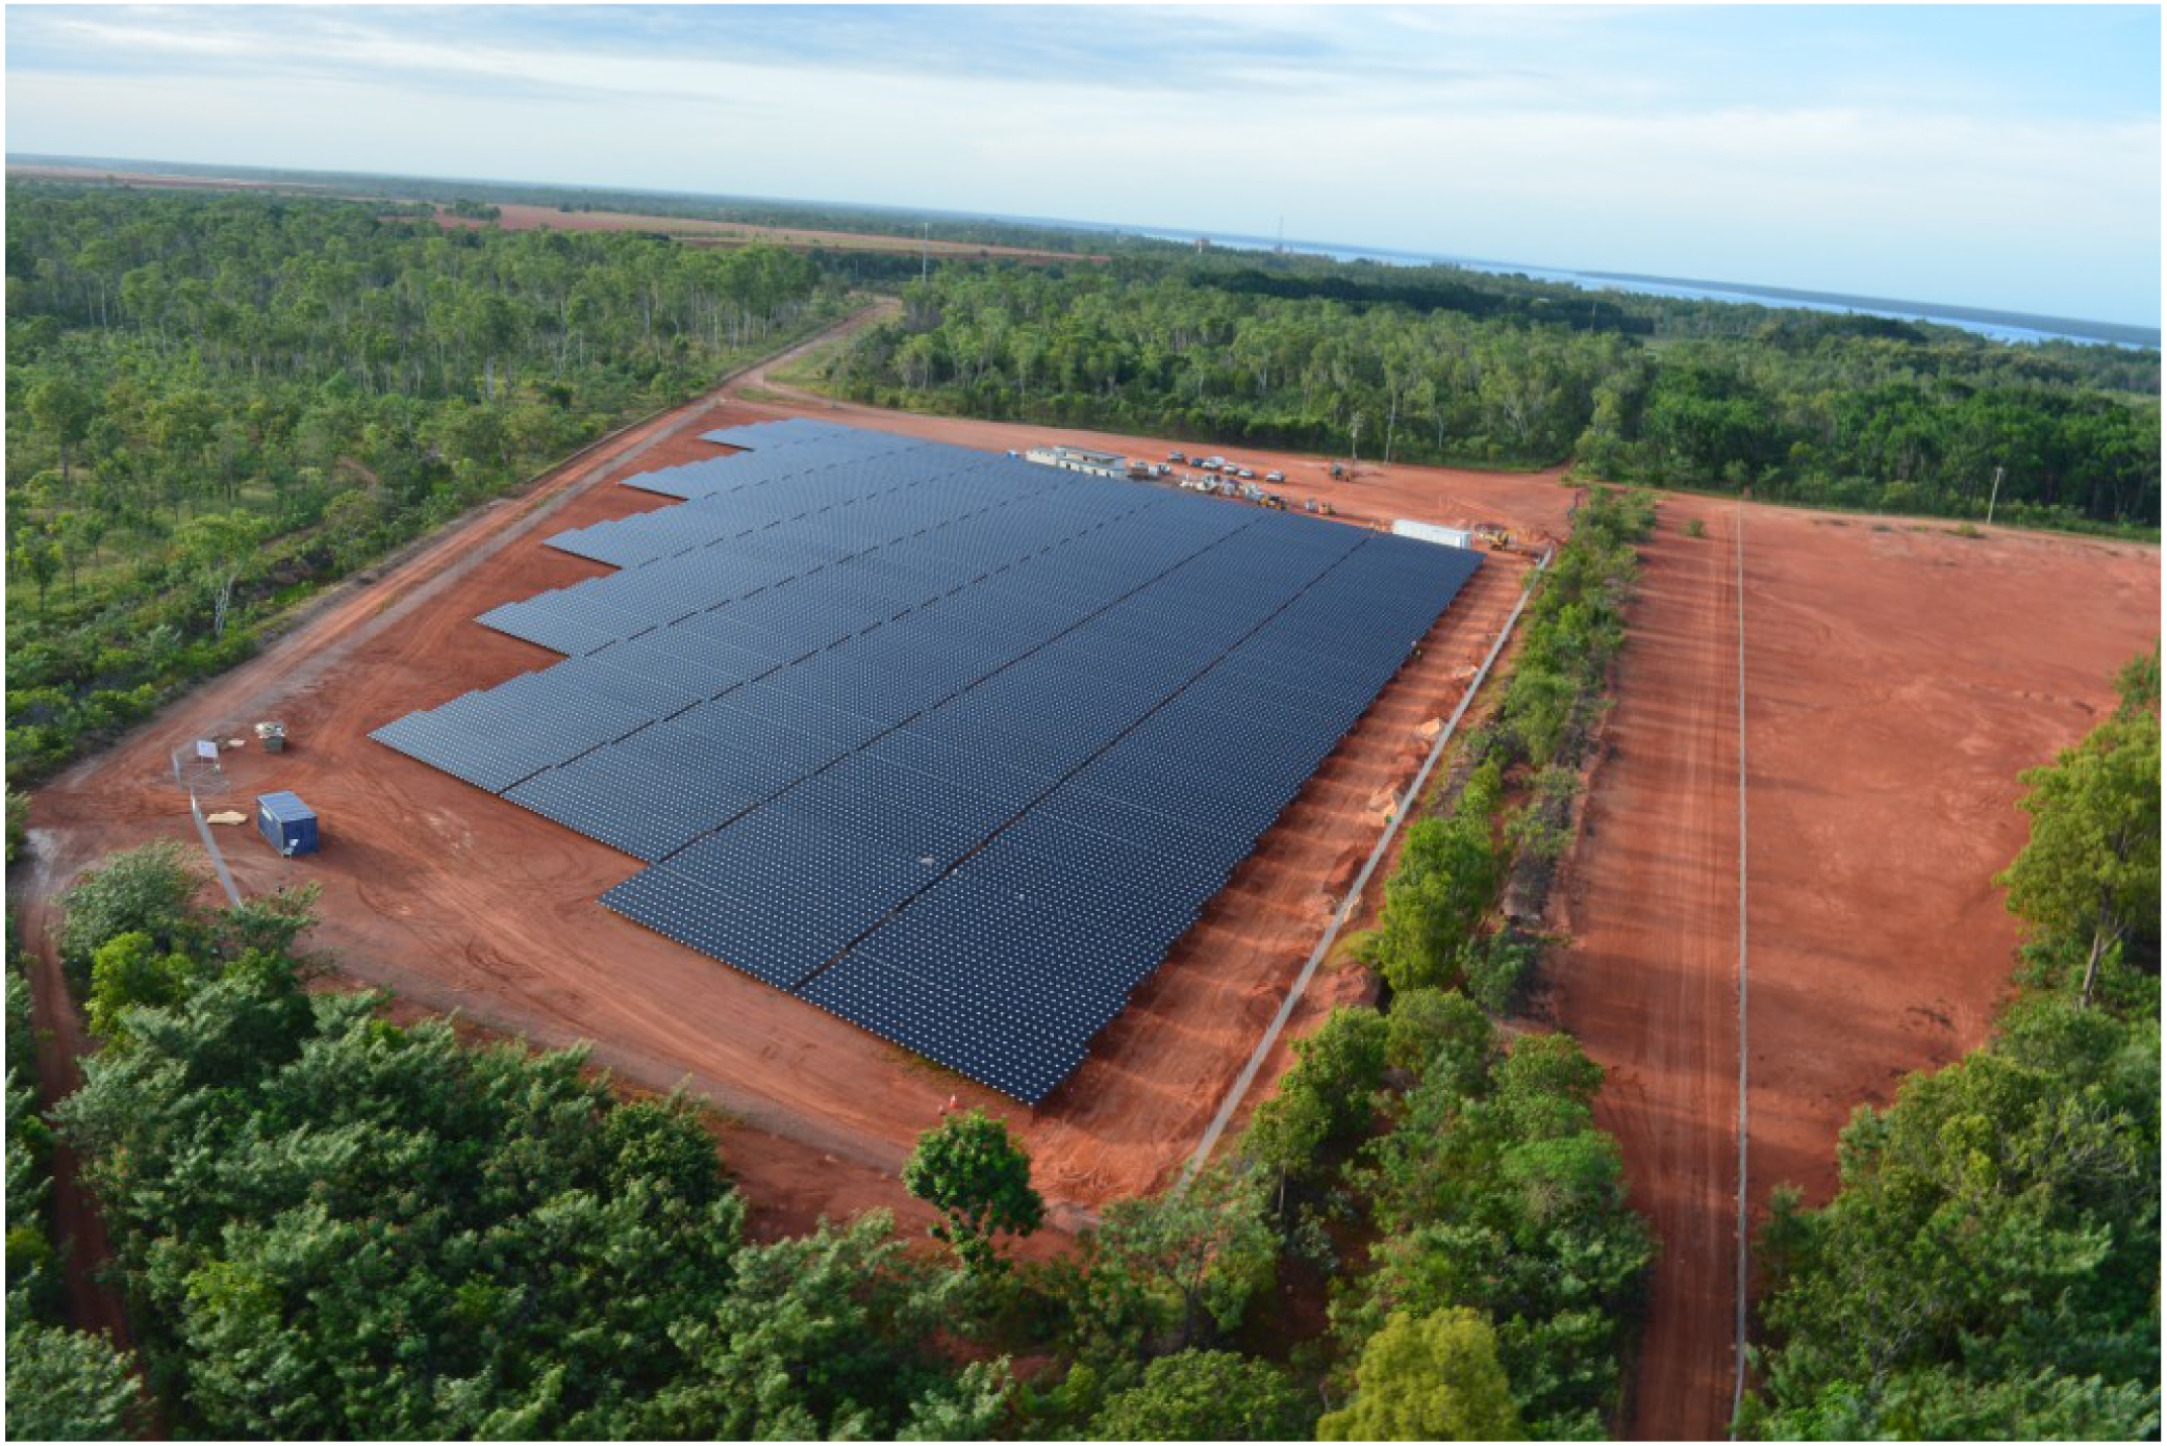 Solar installation at Rio Tinto’s Weipa bauxite mine in Australia. Copyright: Australian Renewable Energy Agency.